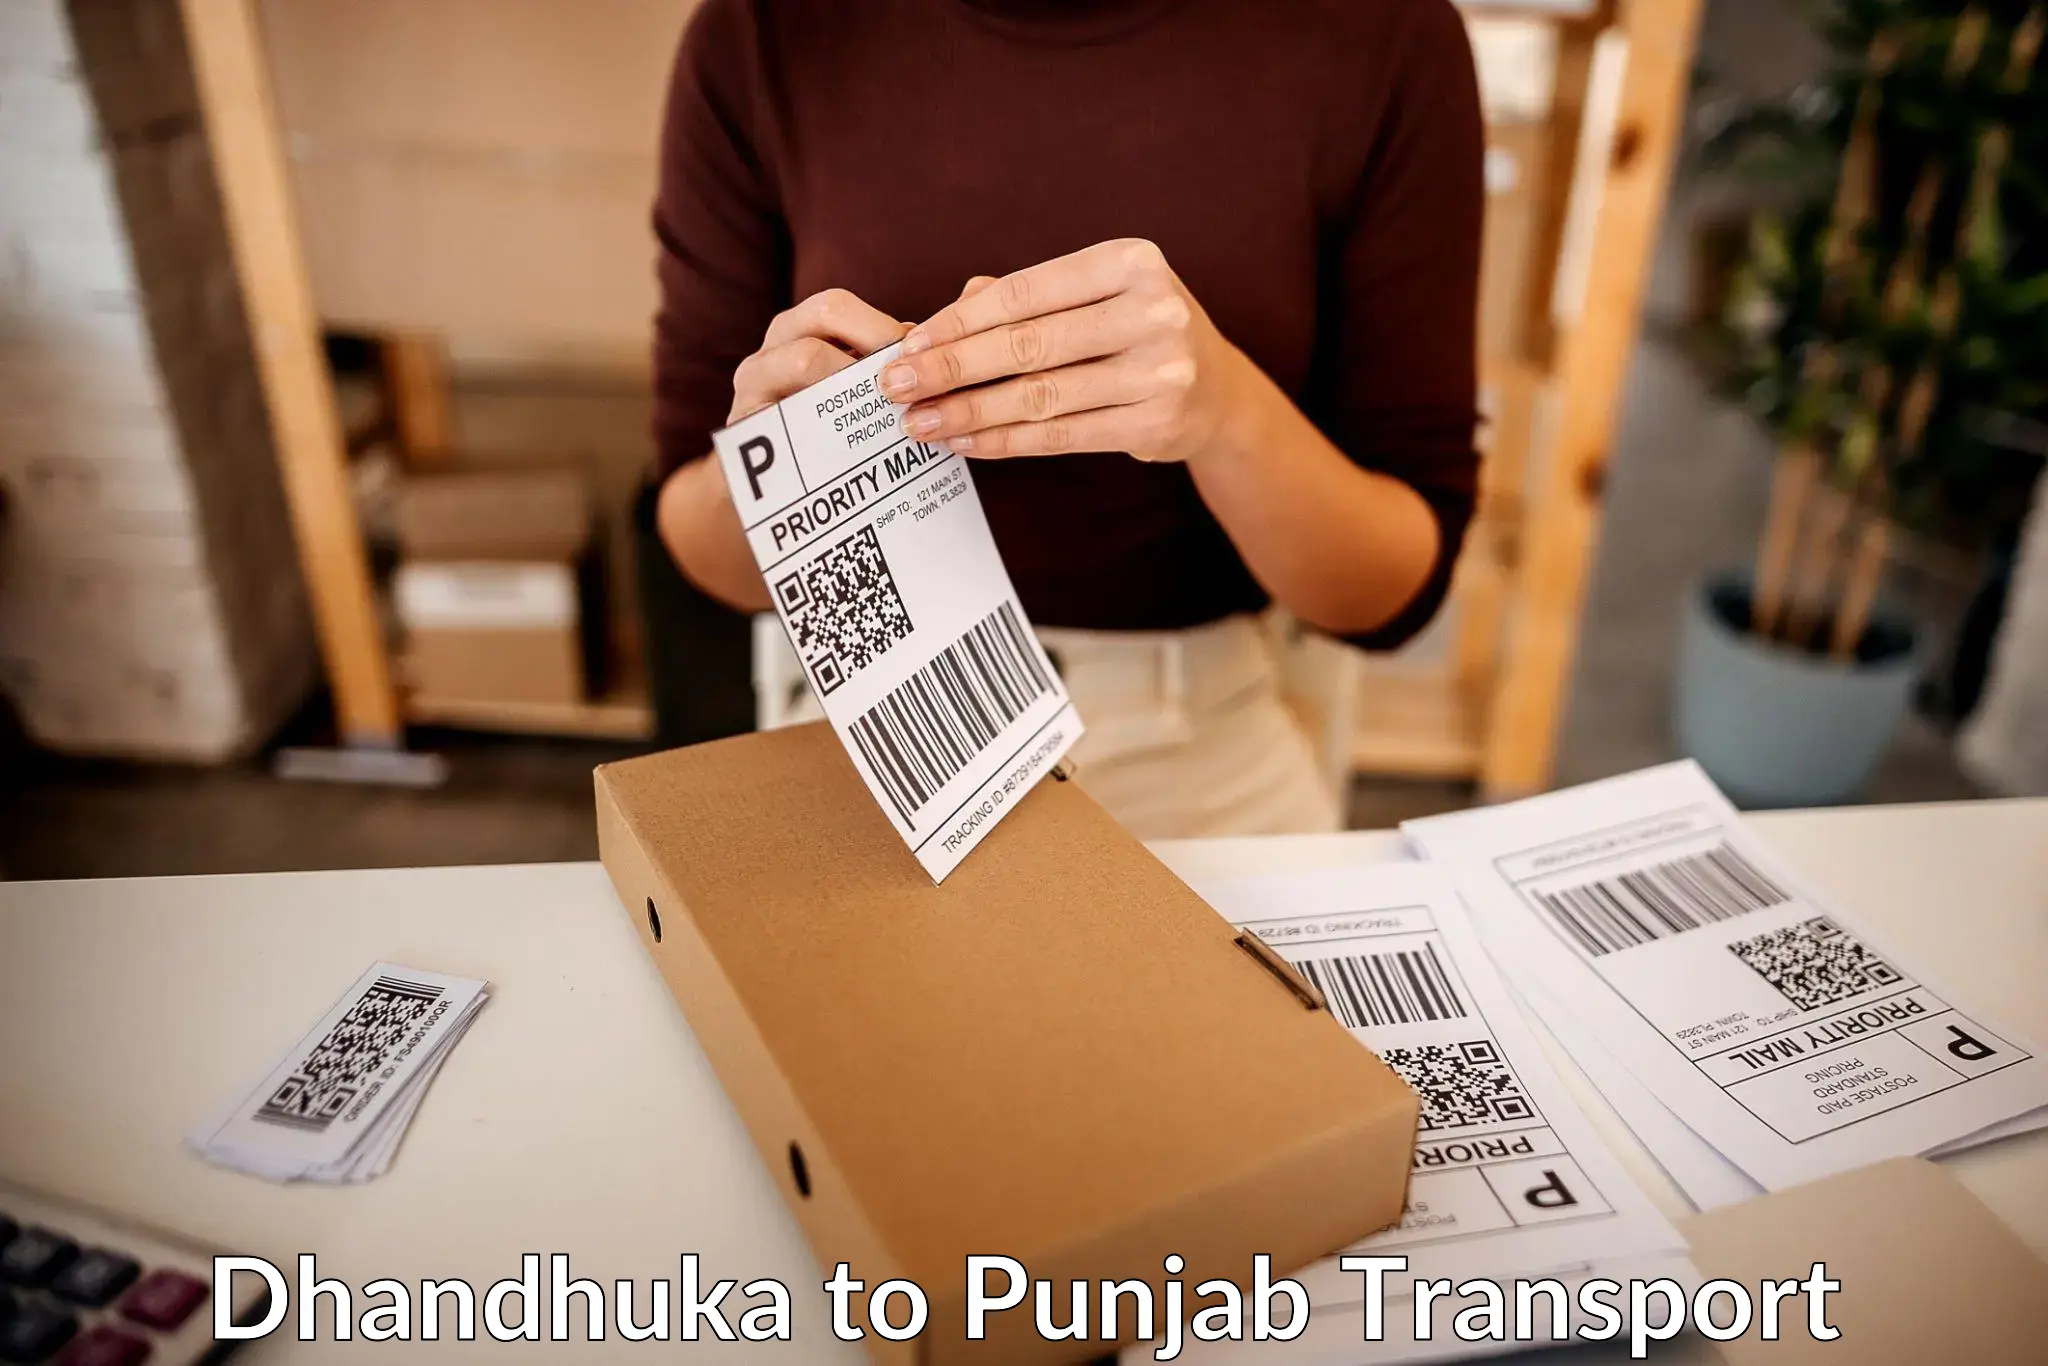 Cargo train transport services Dhandhuka to Ludhiana